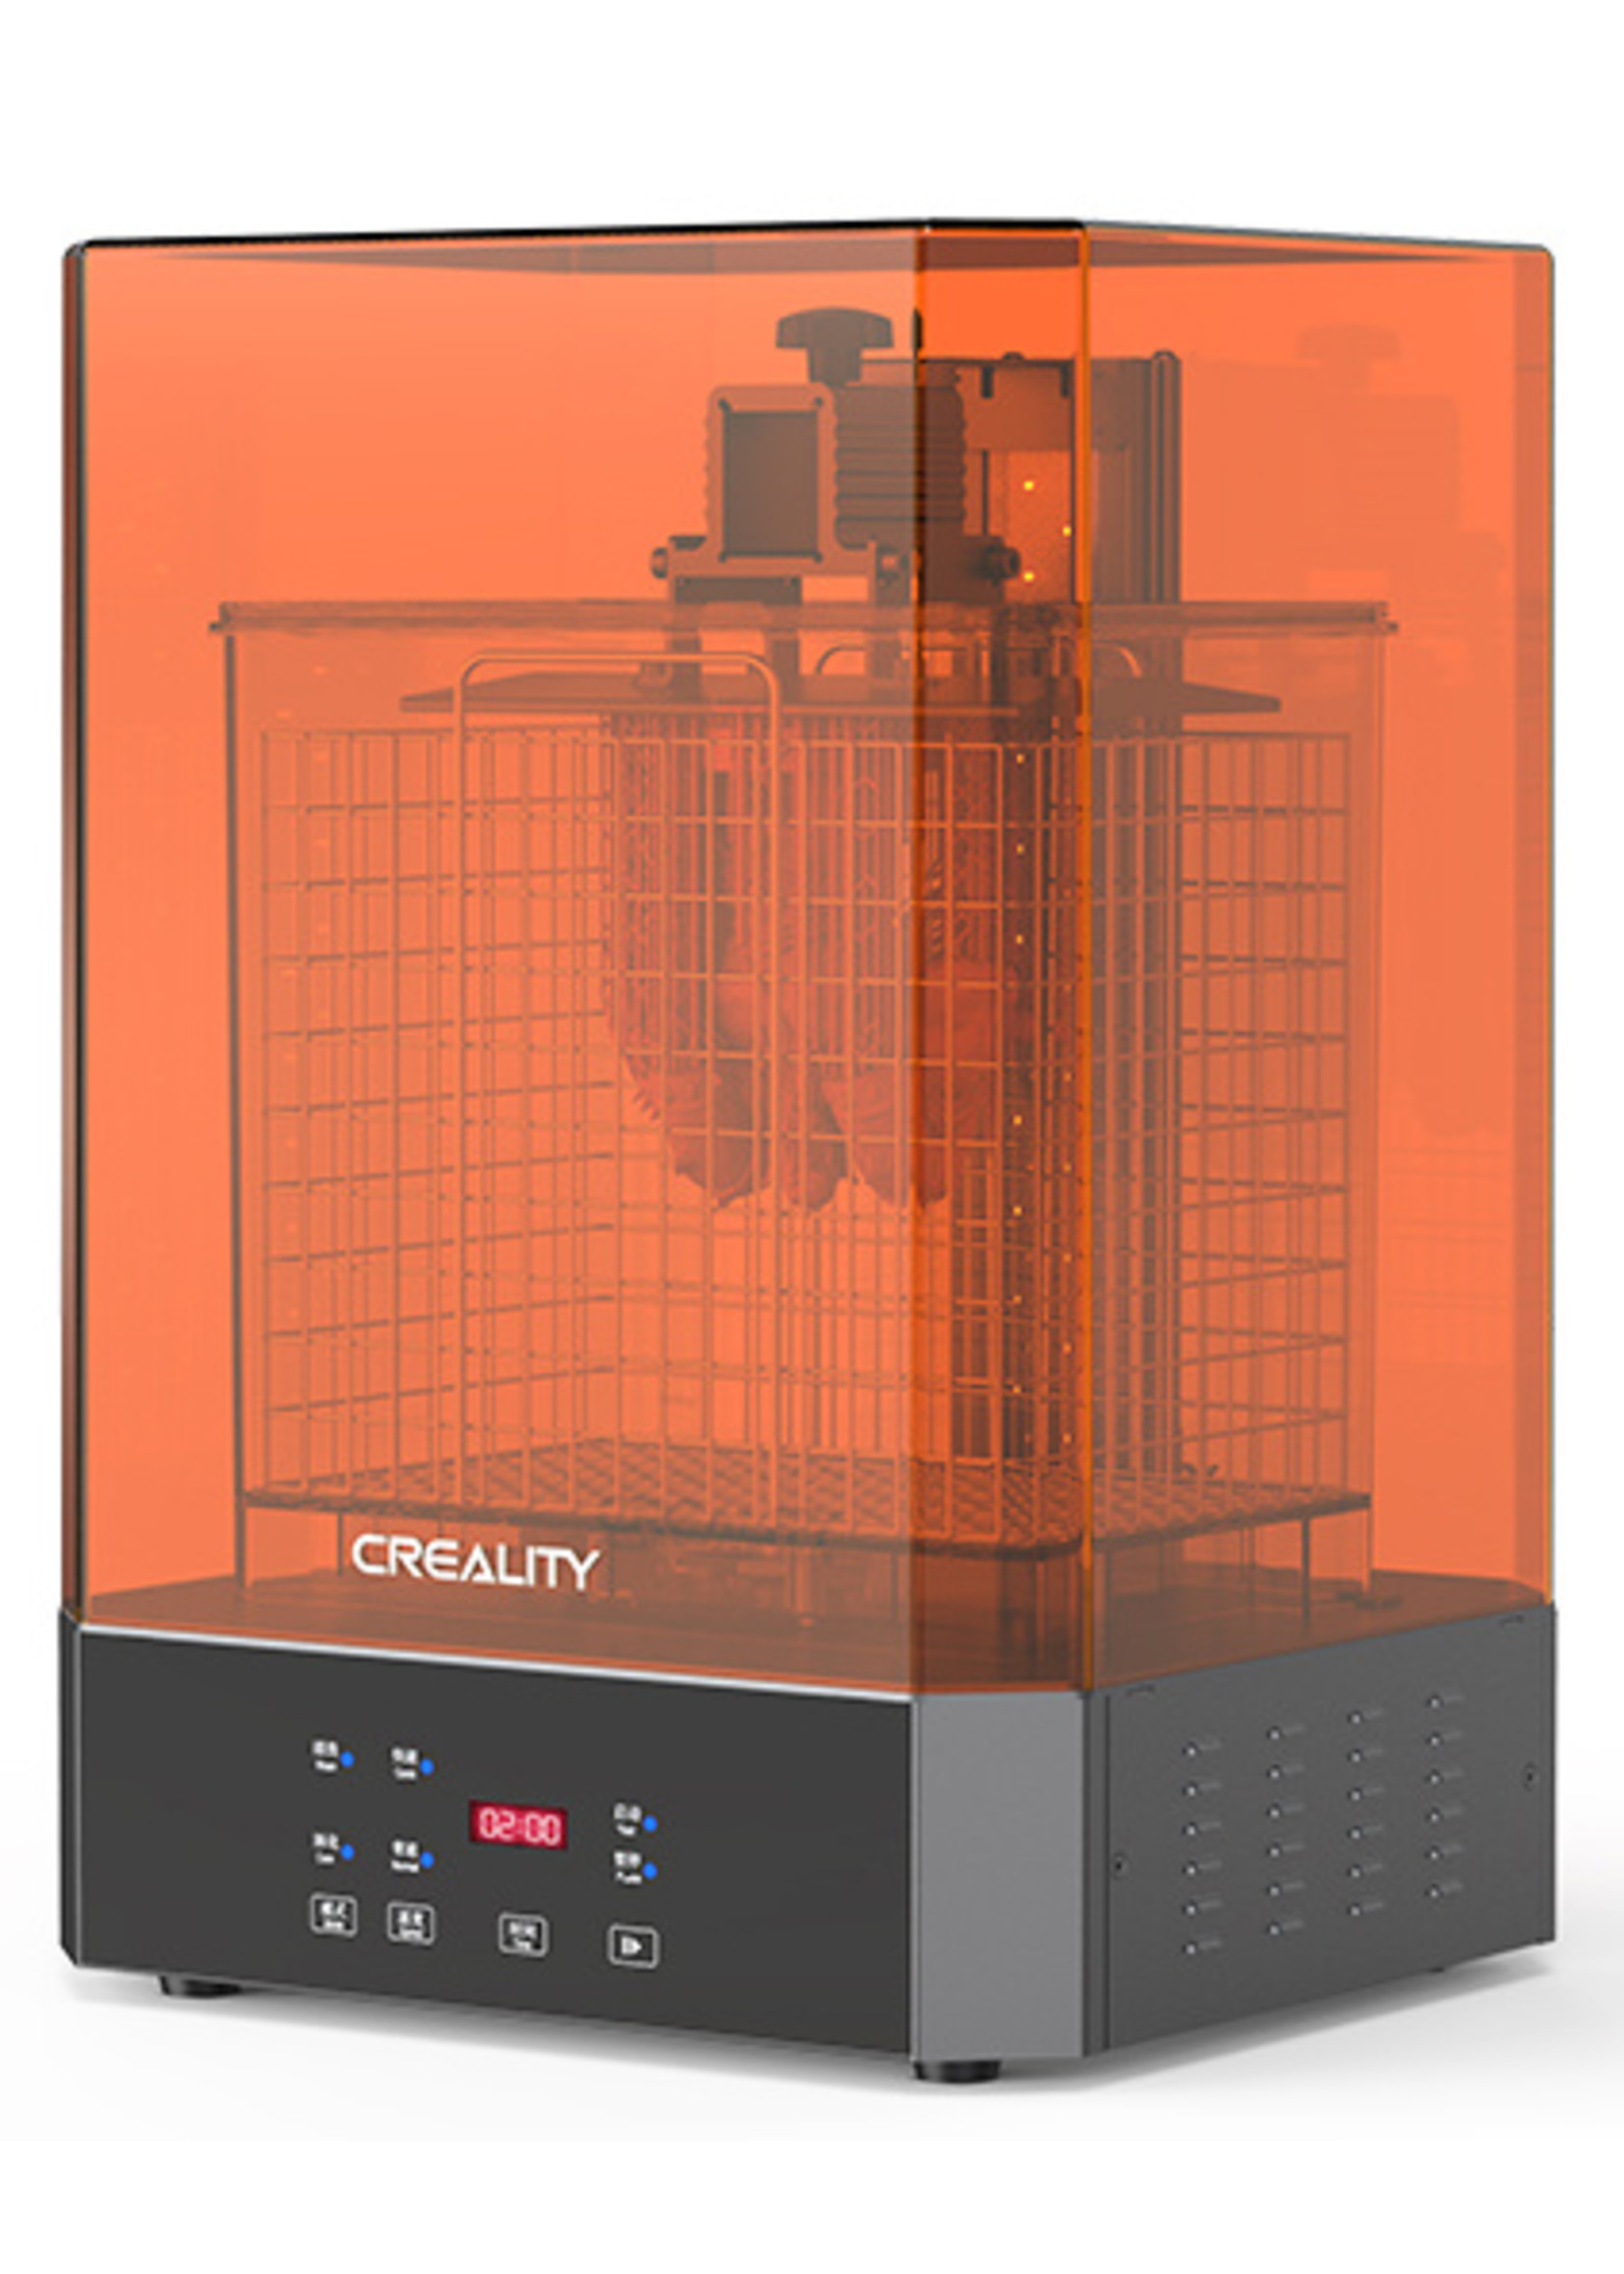 Creality/Ender Creality UW-02 - washing and curing machine